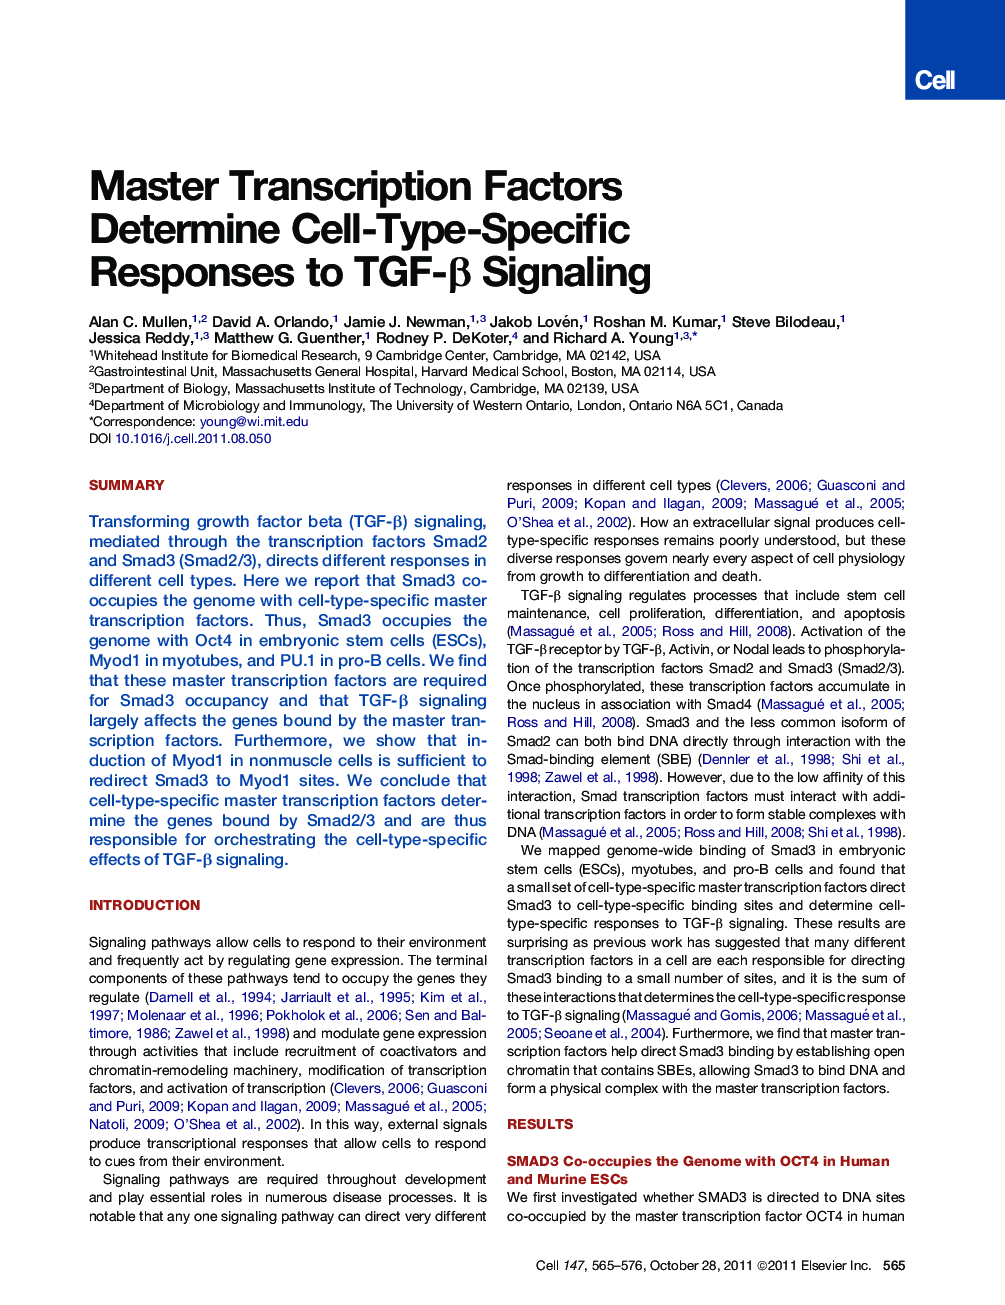 Master Transcription Factors Determine Cell-Type-Specific Responses to TGF-β Signaling